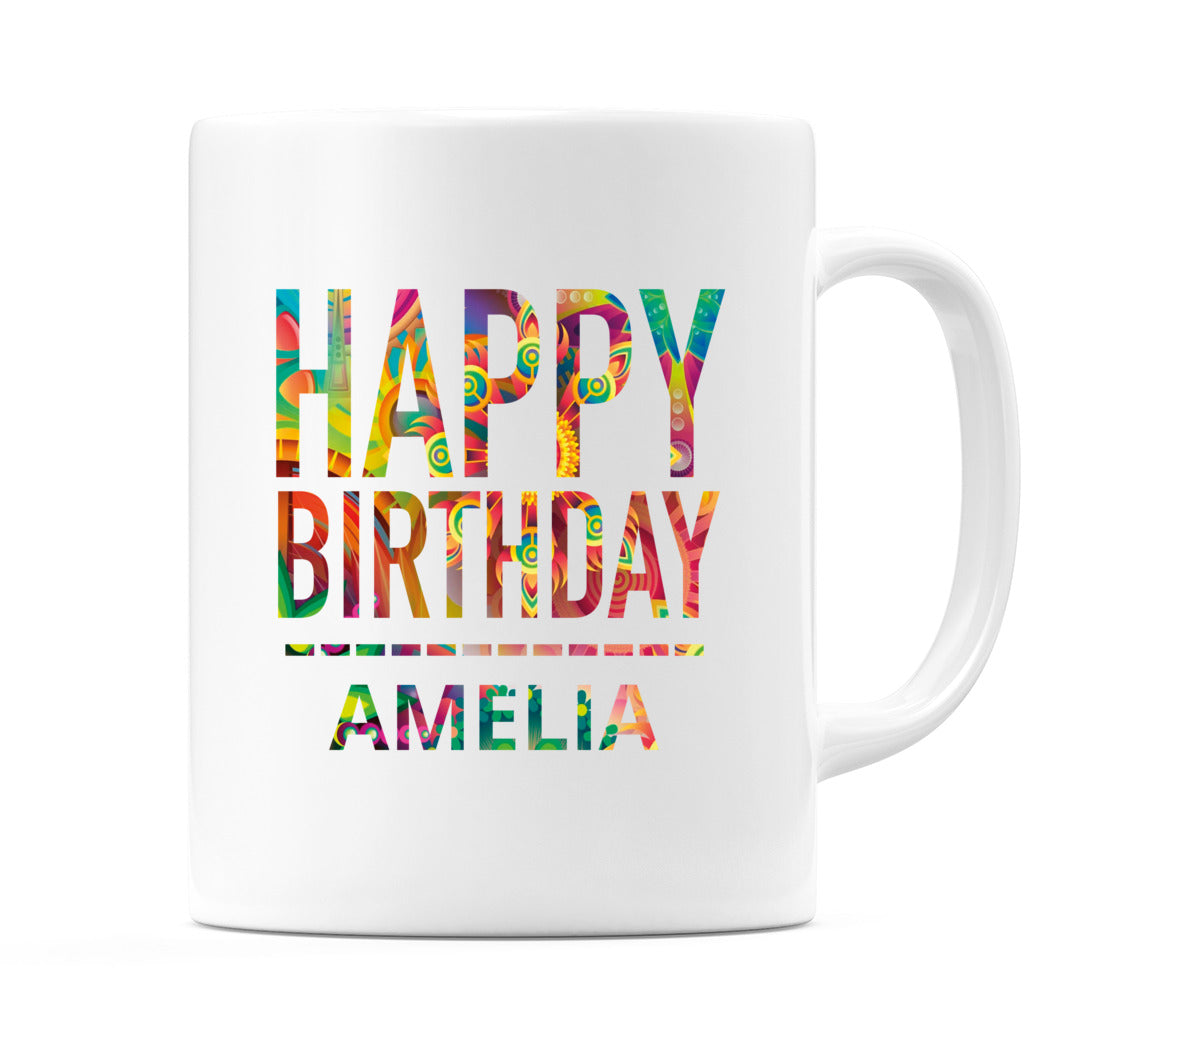 Happy Birthday Amelia (Tie Dye Effect) Mug Cup by WeDoMugs